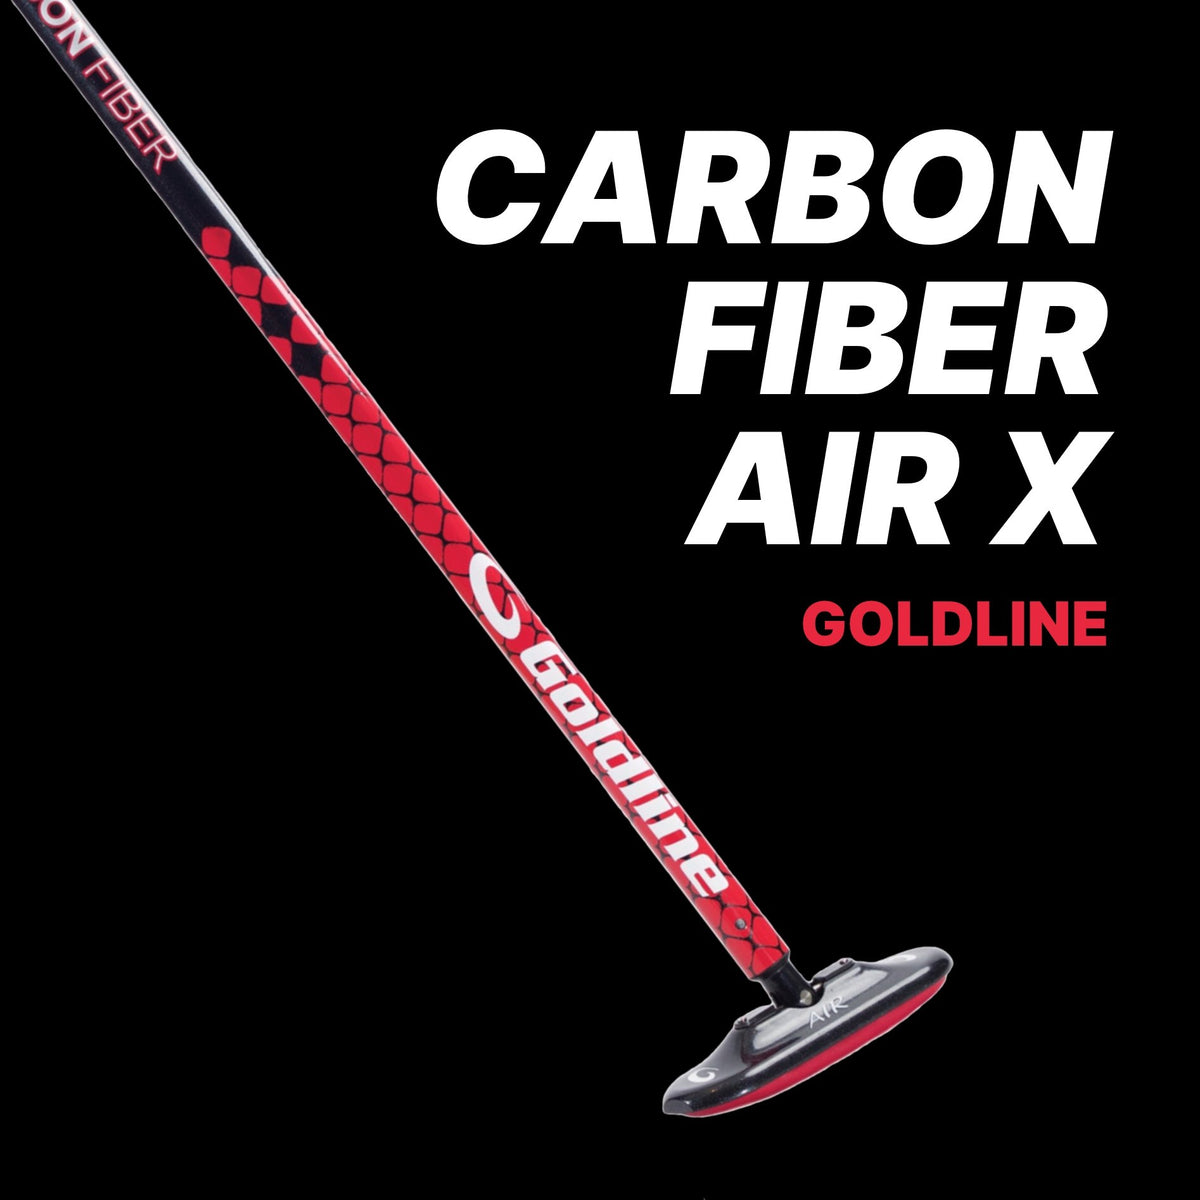 Goldline Carbon Fiber AIR X